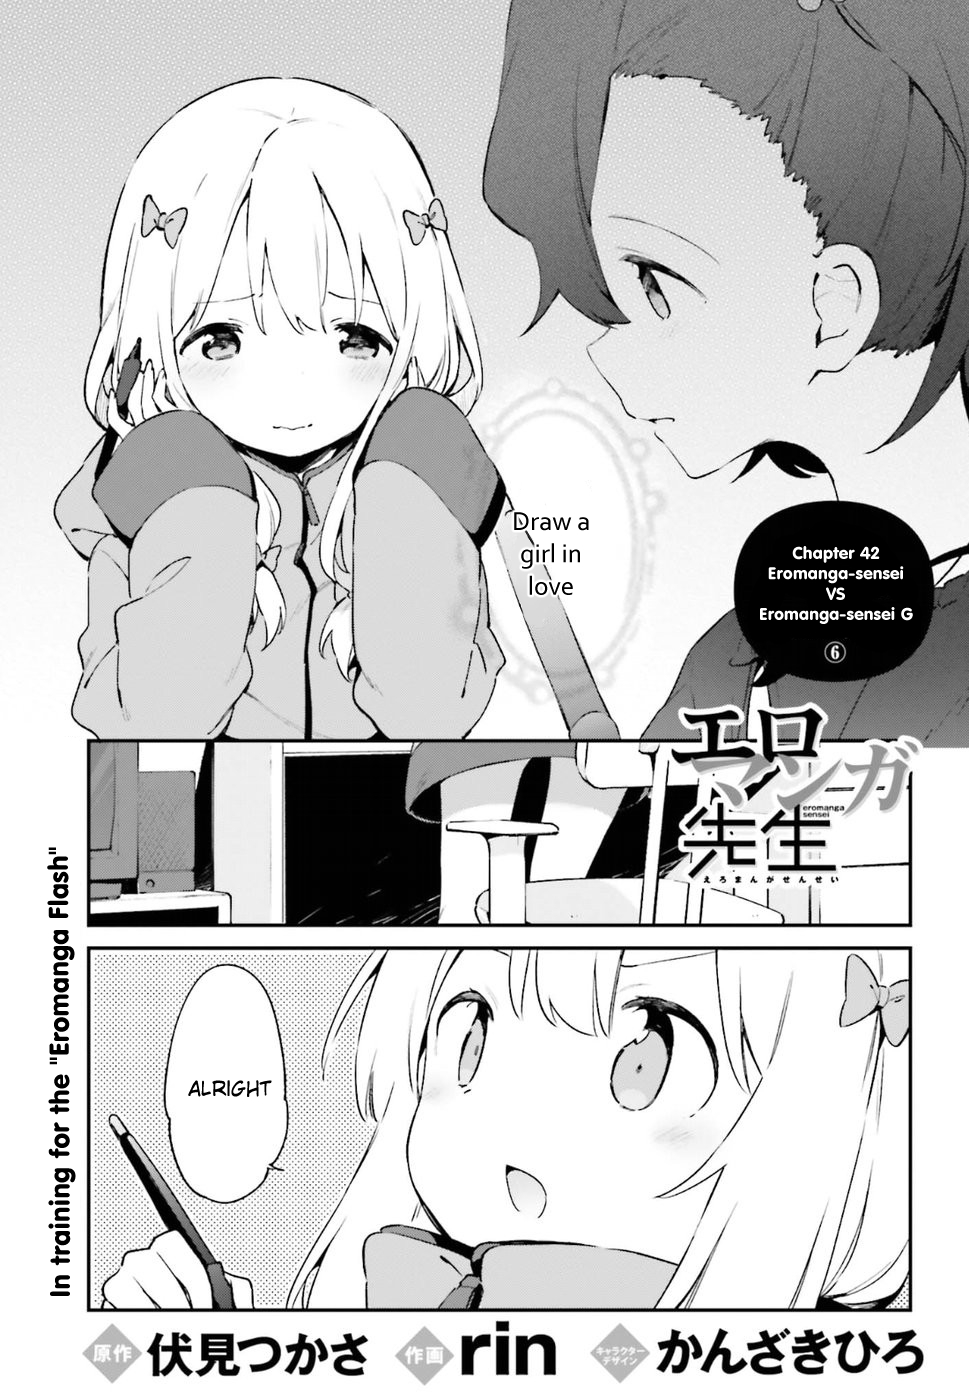 Ero Manga Sensei - 42 page 1